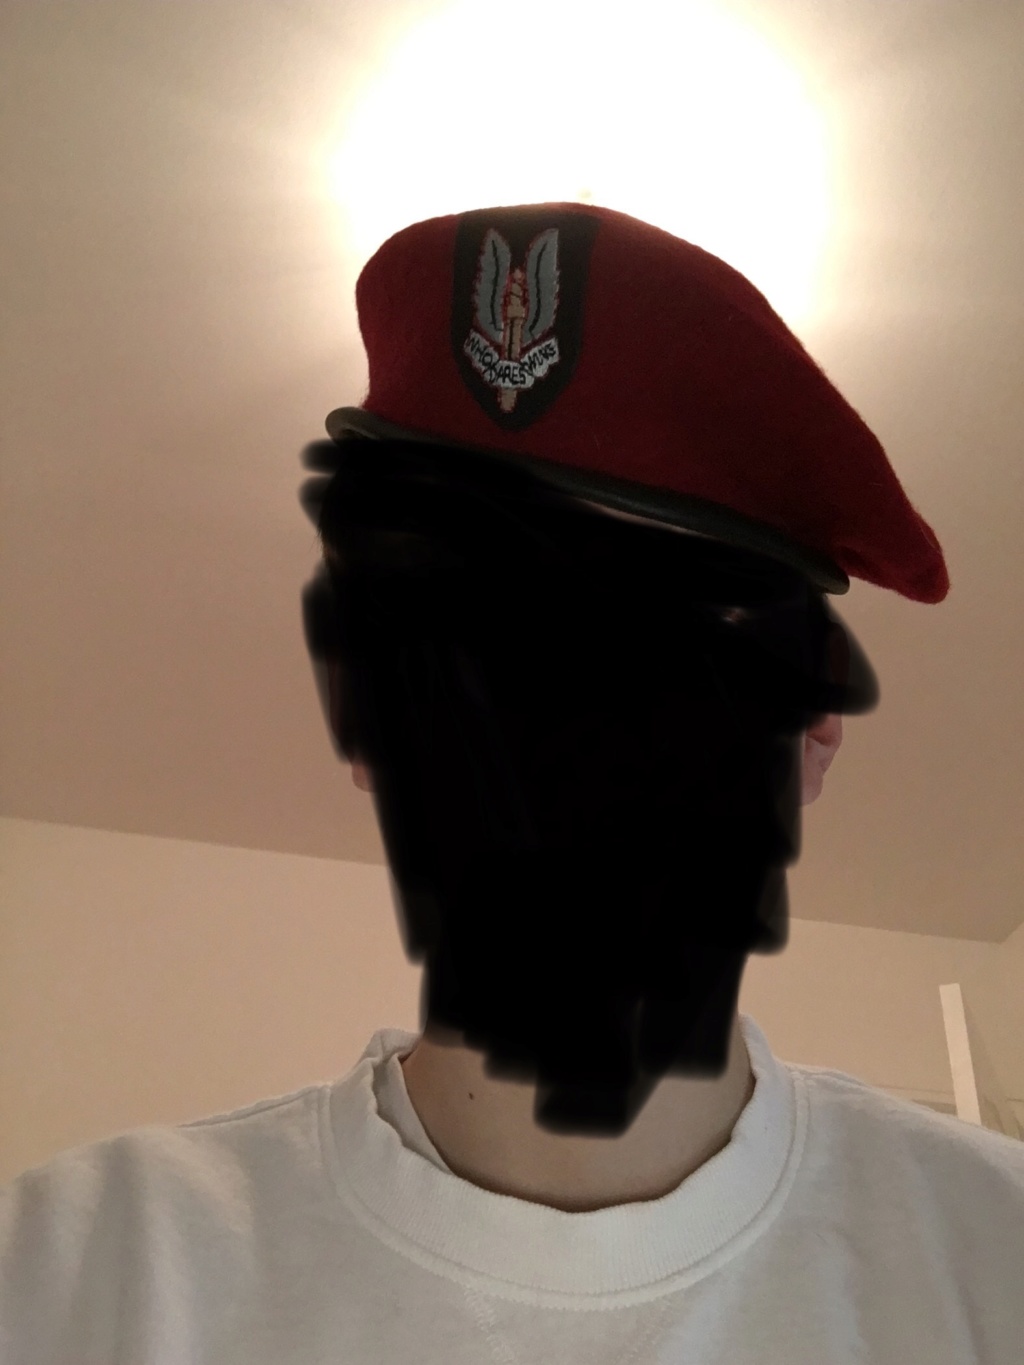 Confirmation pour un beret SAS anglais Img_e110